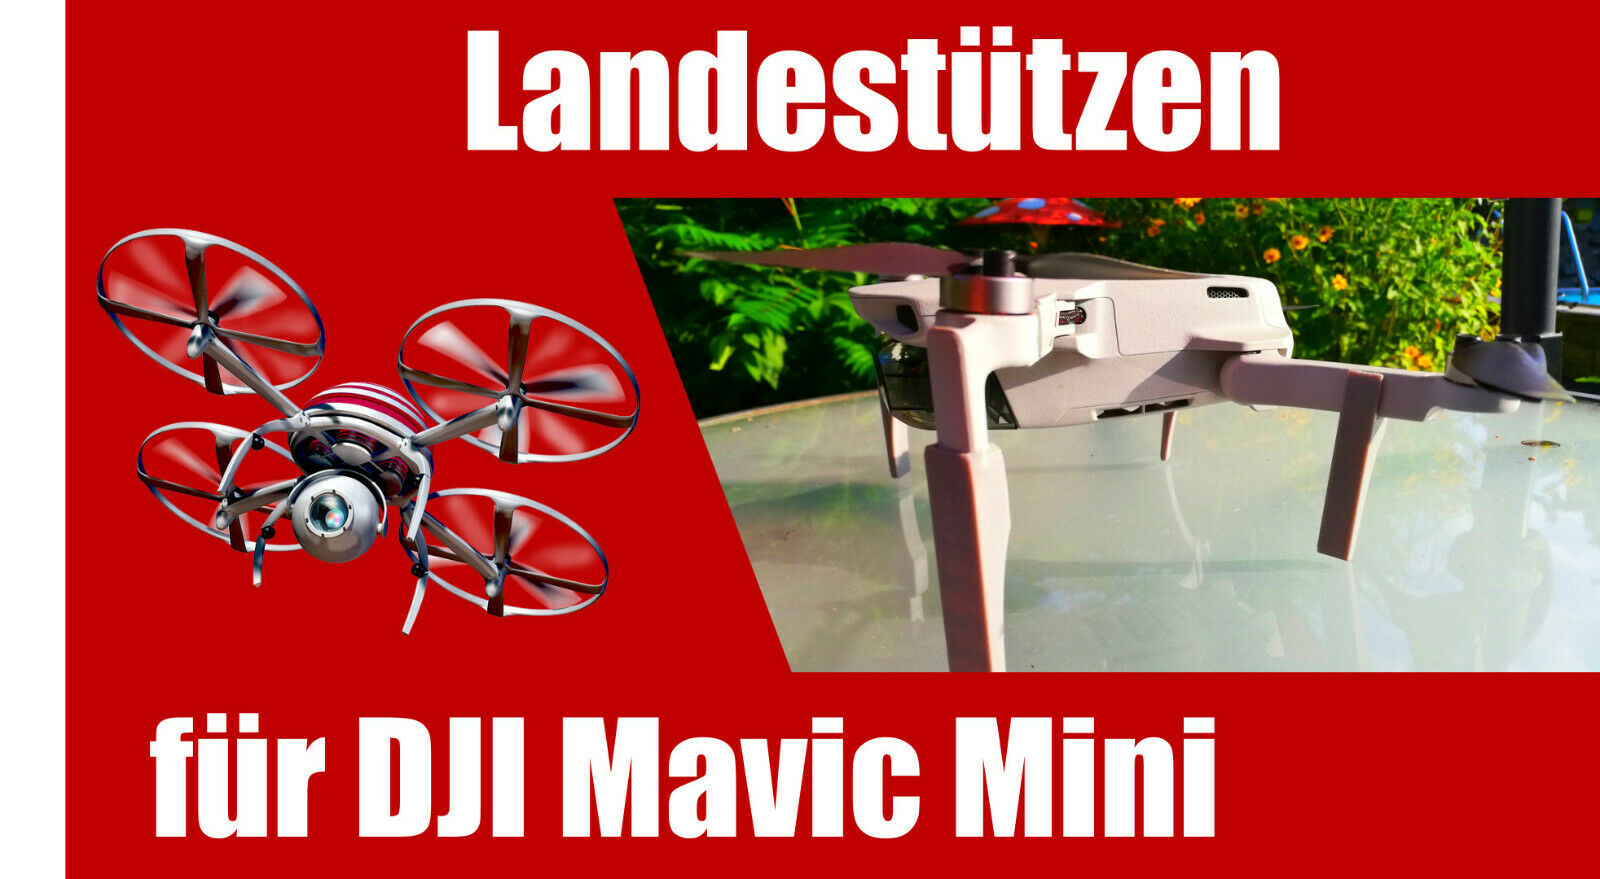 Landestützen für DJI Mavic Mini - Landefüße für Drohne Fahrwerk